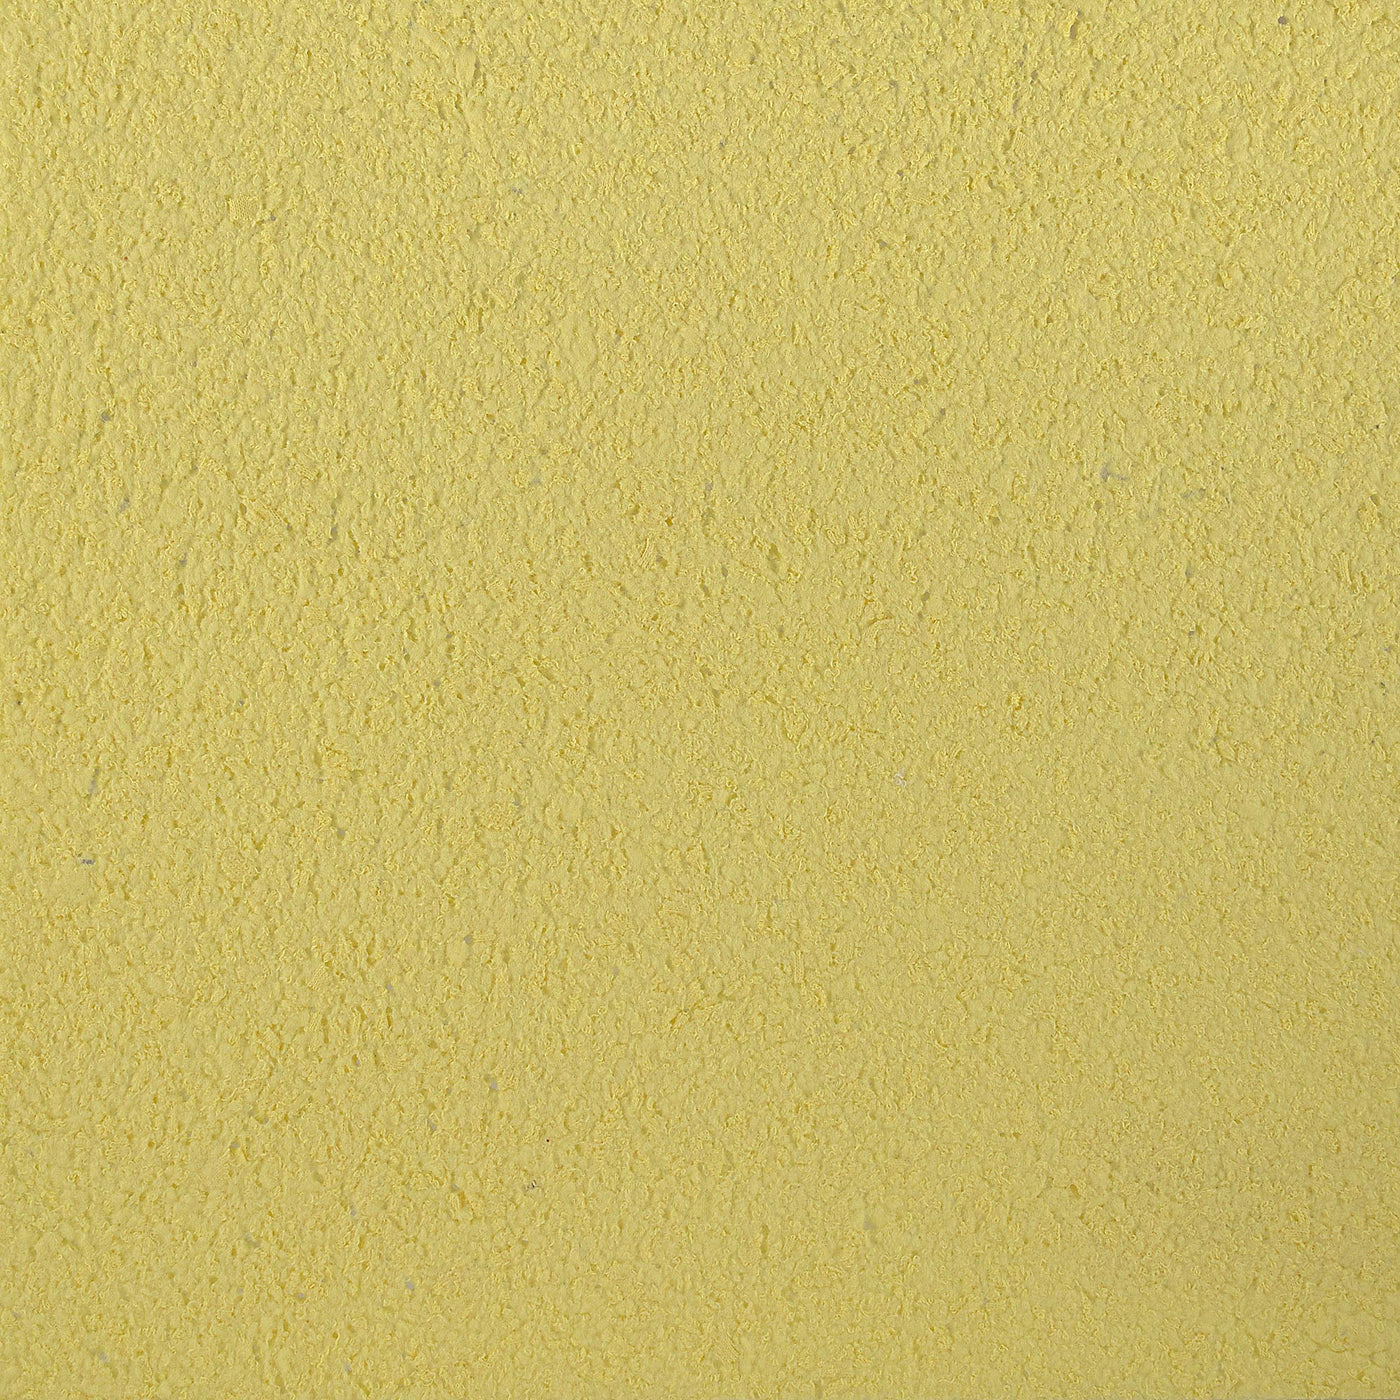 Cotton plaster color decor corn